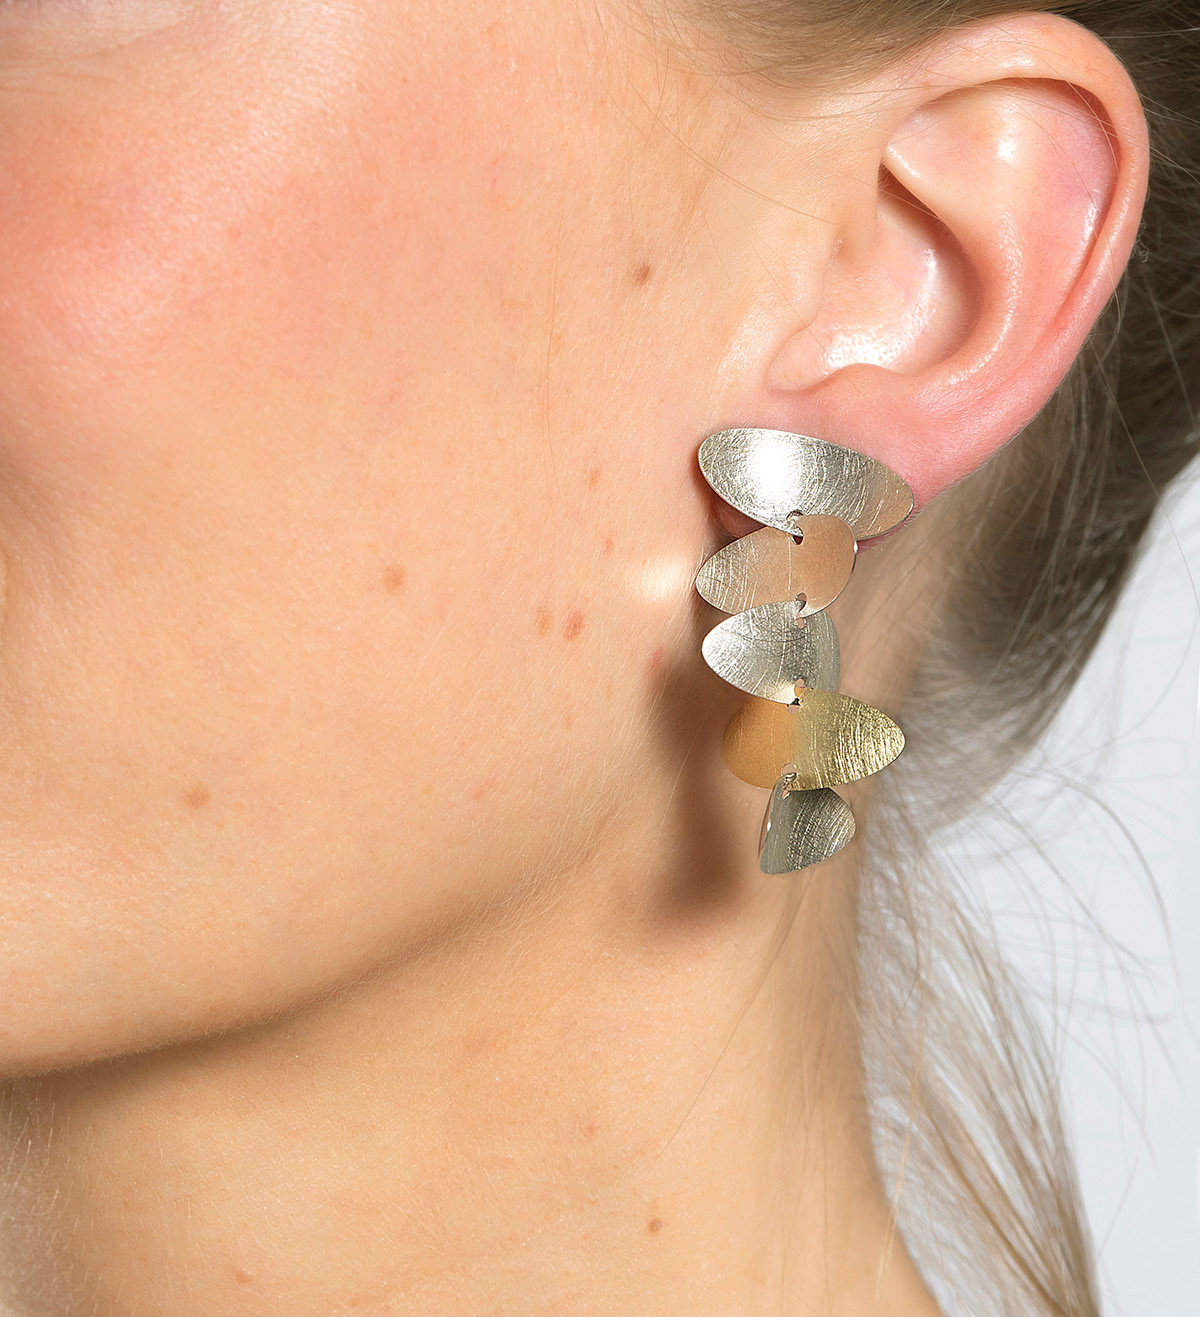 18k gold and silver earrings Samoa 50mm